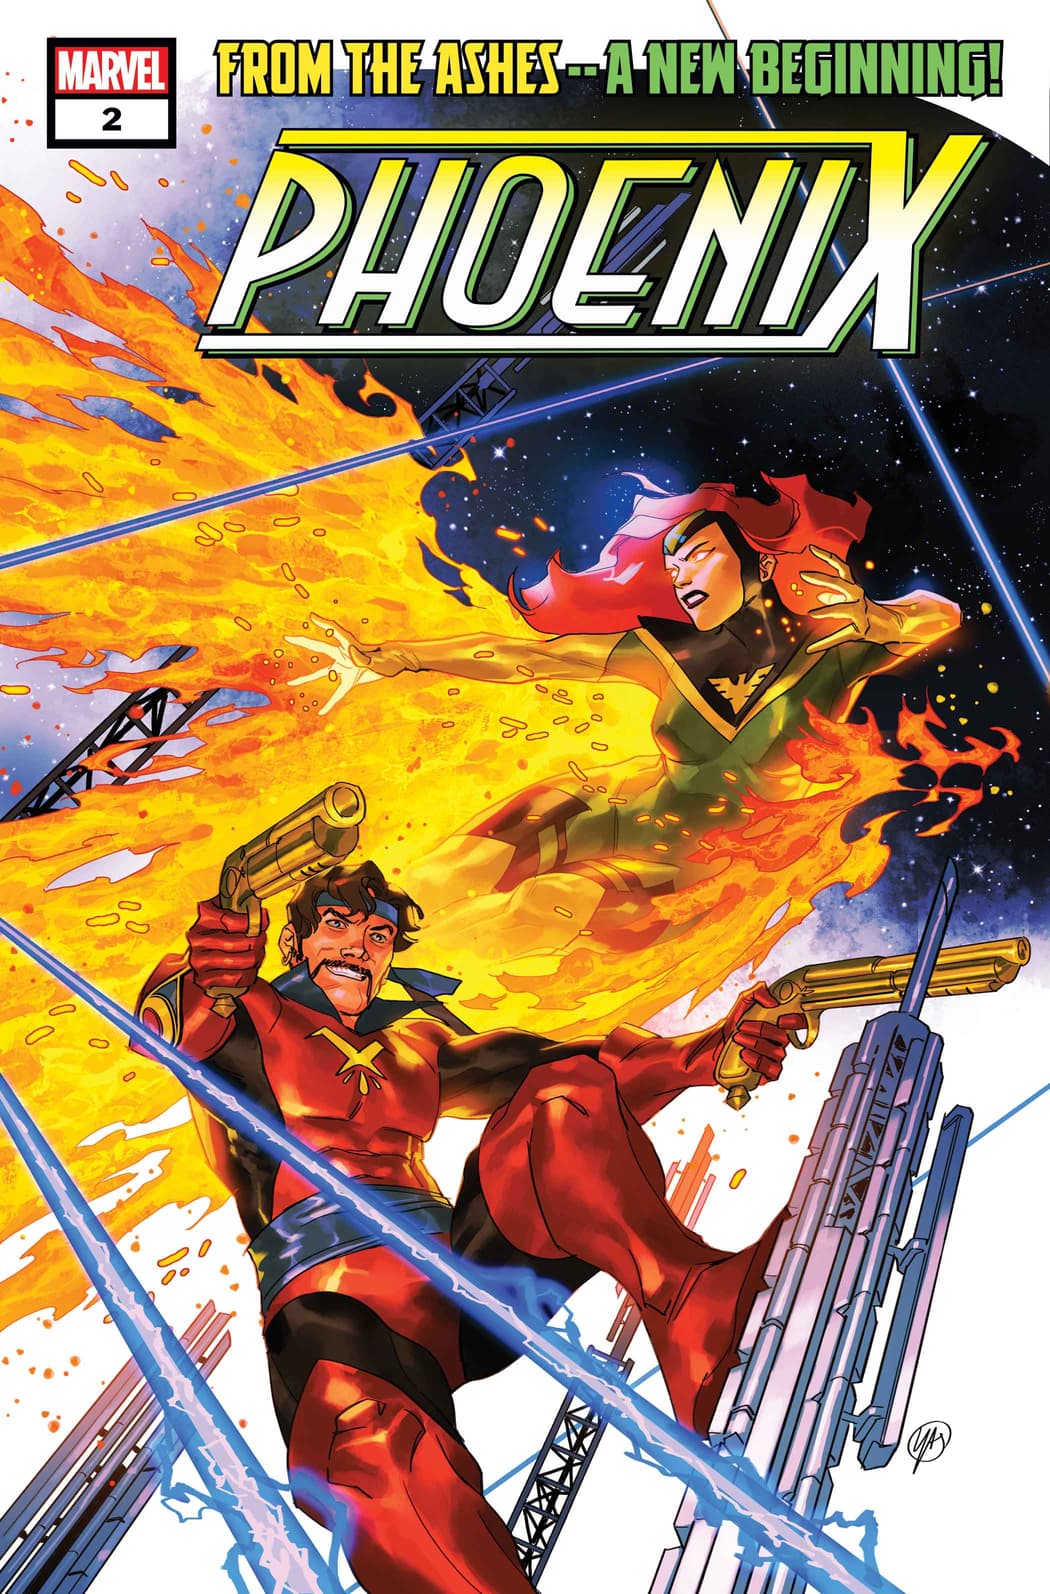 PHOENIX #2 cover by Yasmine Putri